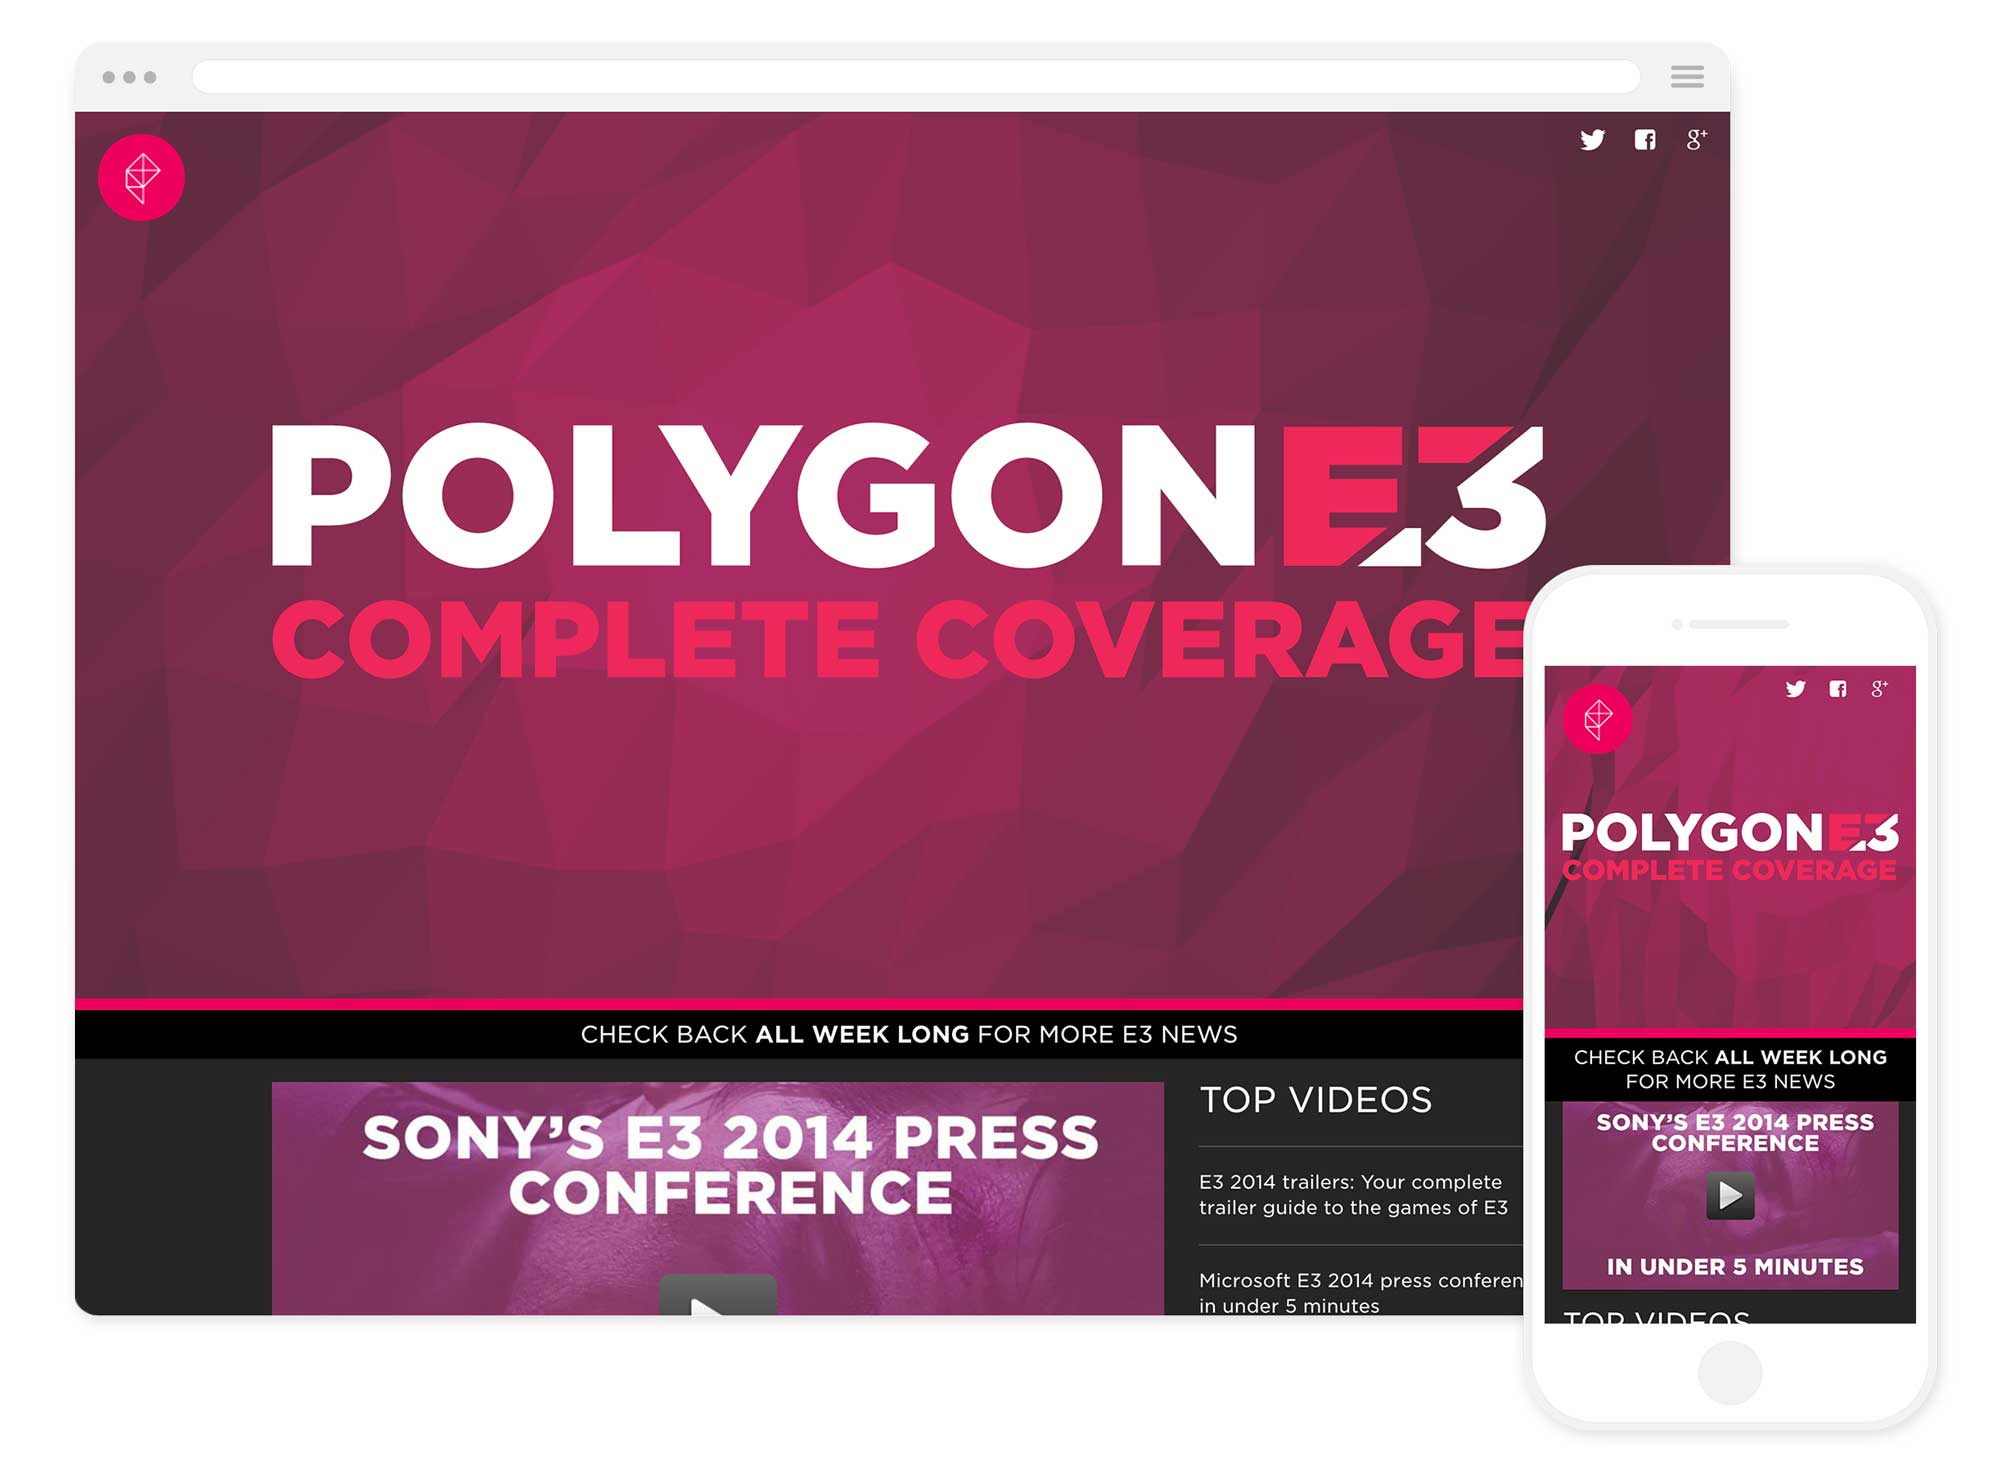 Image of the Polygon E3 website